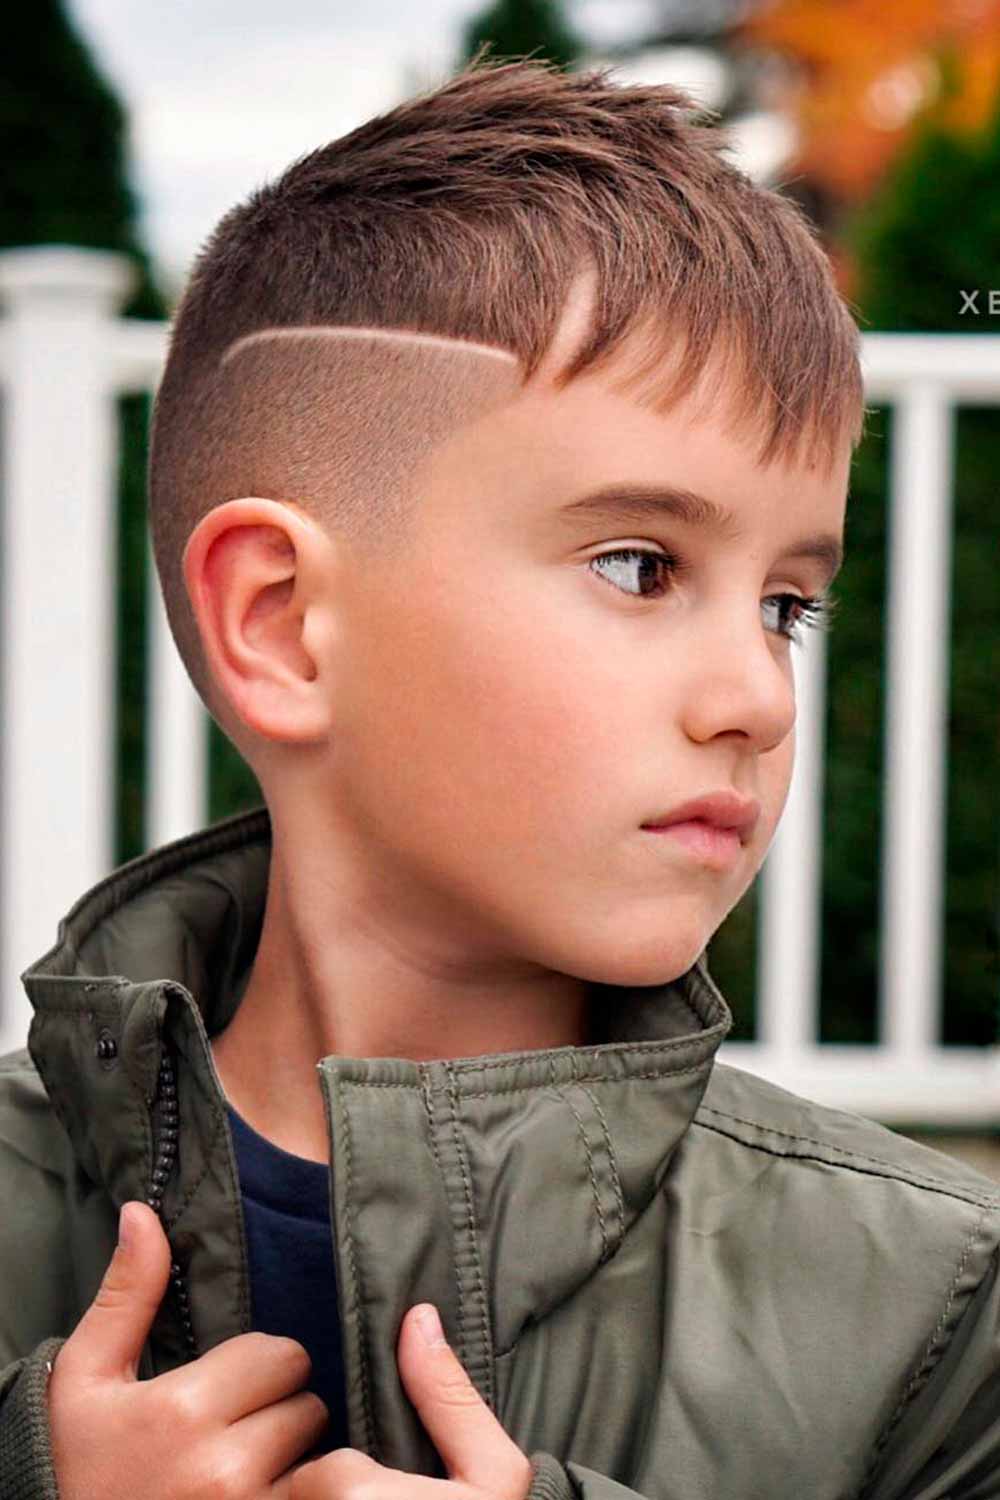 Simple Hair Style Boys With Fade And Design #boyshaircuts #kidshaircut #boyhaircuts